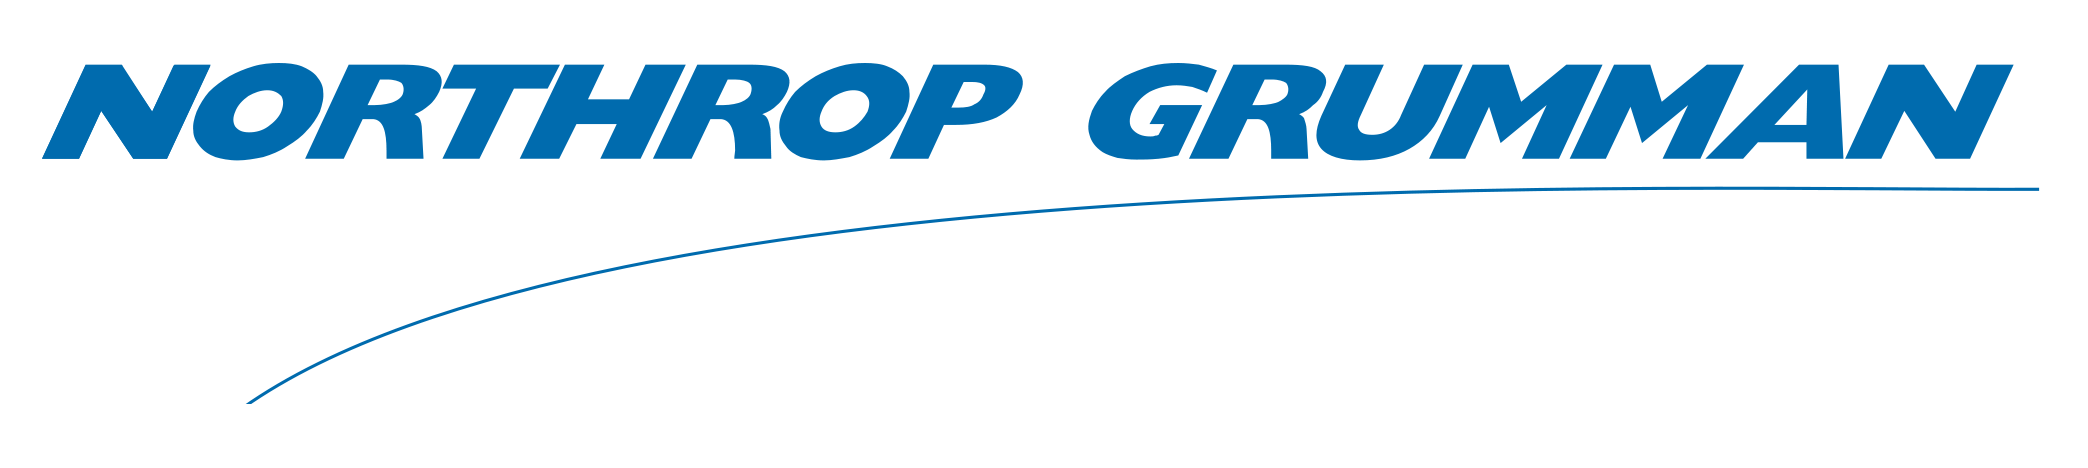 Northrop Grumman Logo PNG Image